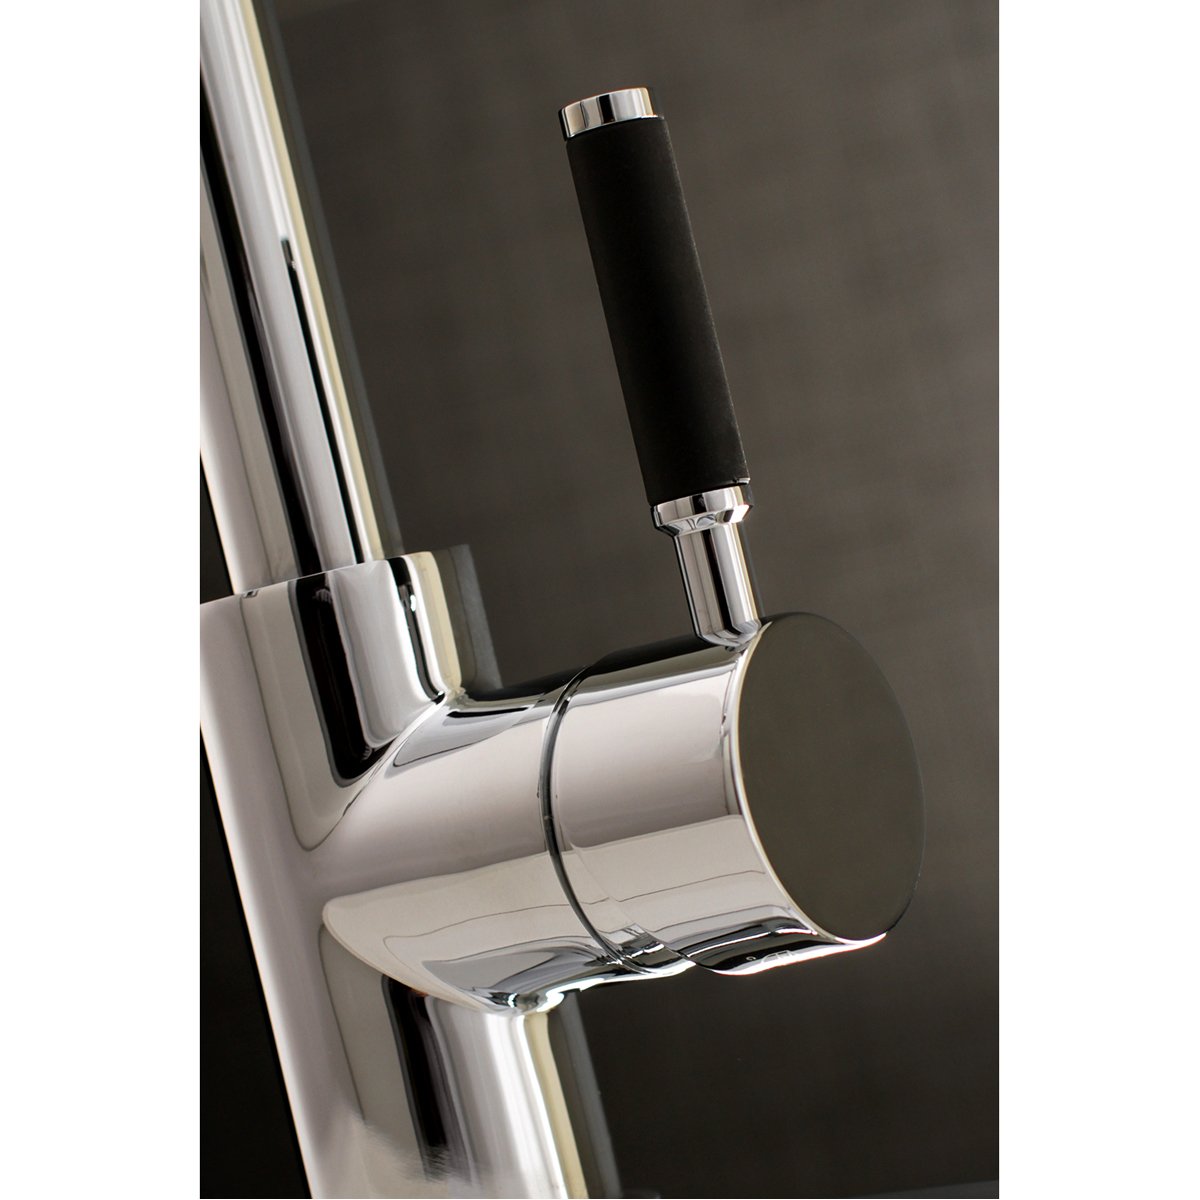 Kingston Brass Gourmetier Kaiser Deck Mount Single-Handle Pull-Down Kitchen Faucet